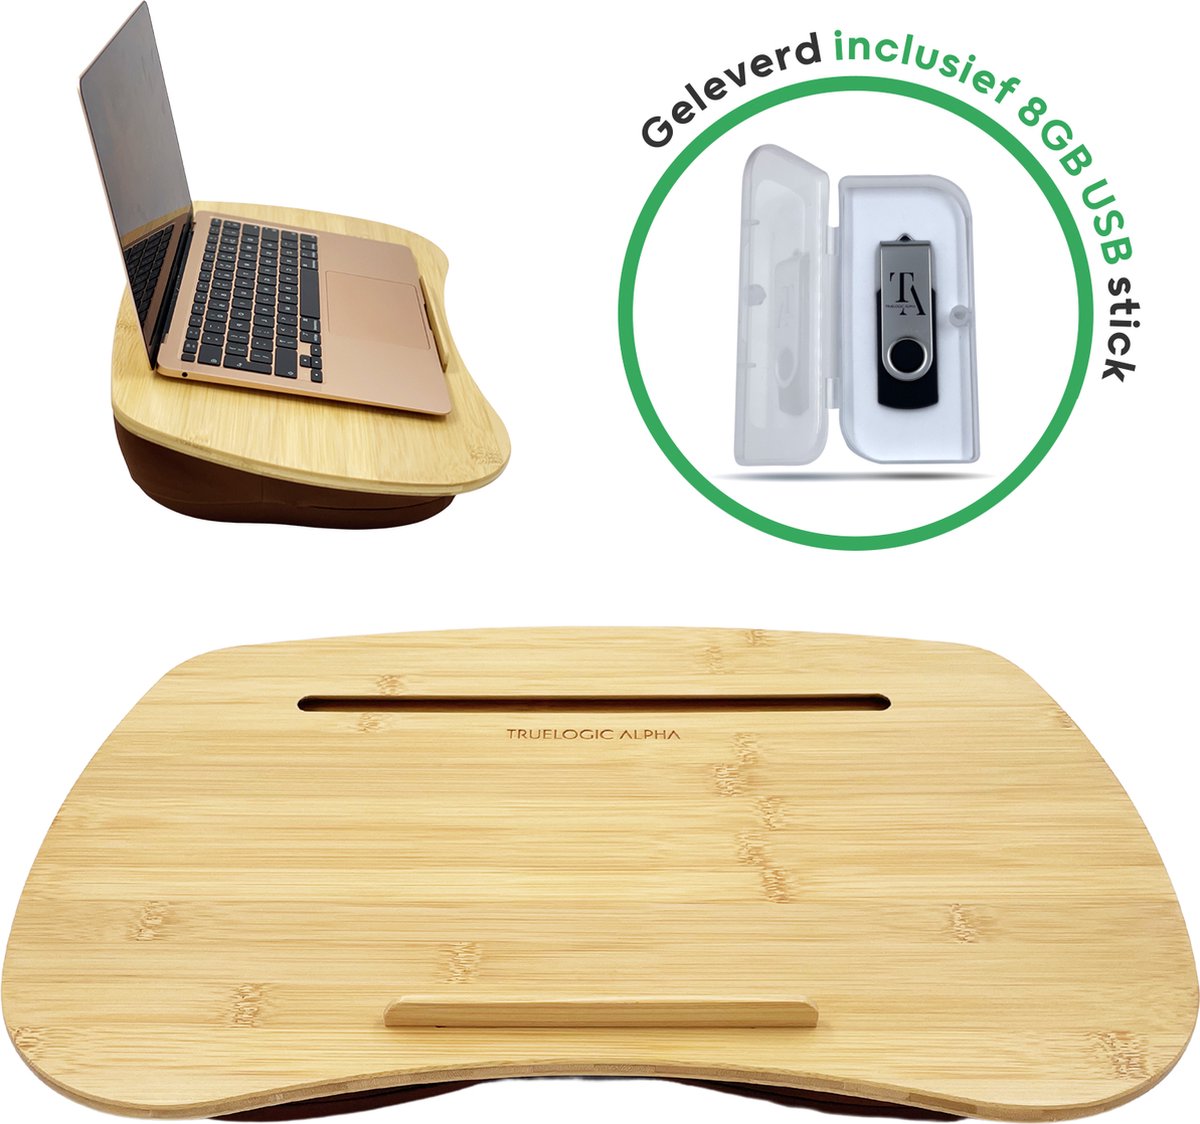 TrueLogic Alpha Bamboe laptopkussen - Inclusief 8GB USB stick - Laptopstandaard - Voor laptops t/m 17 inch - bedtafel - Laptoptafel - Schoottafel - Schootkussen dienblad - Laptray